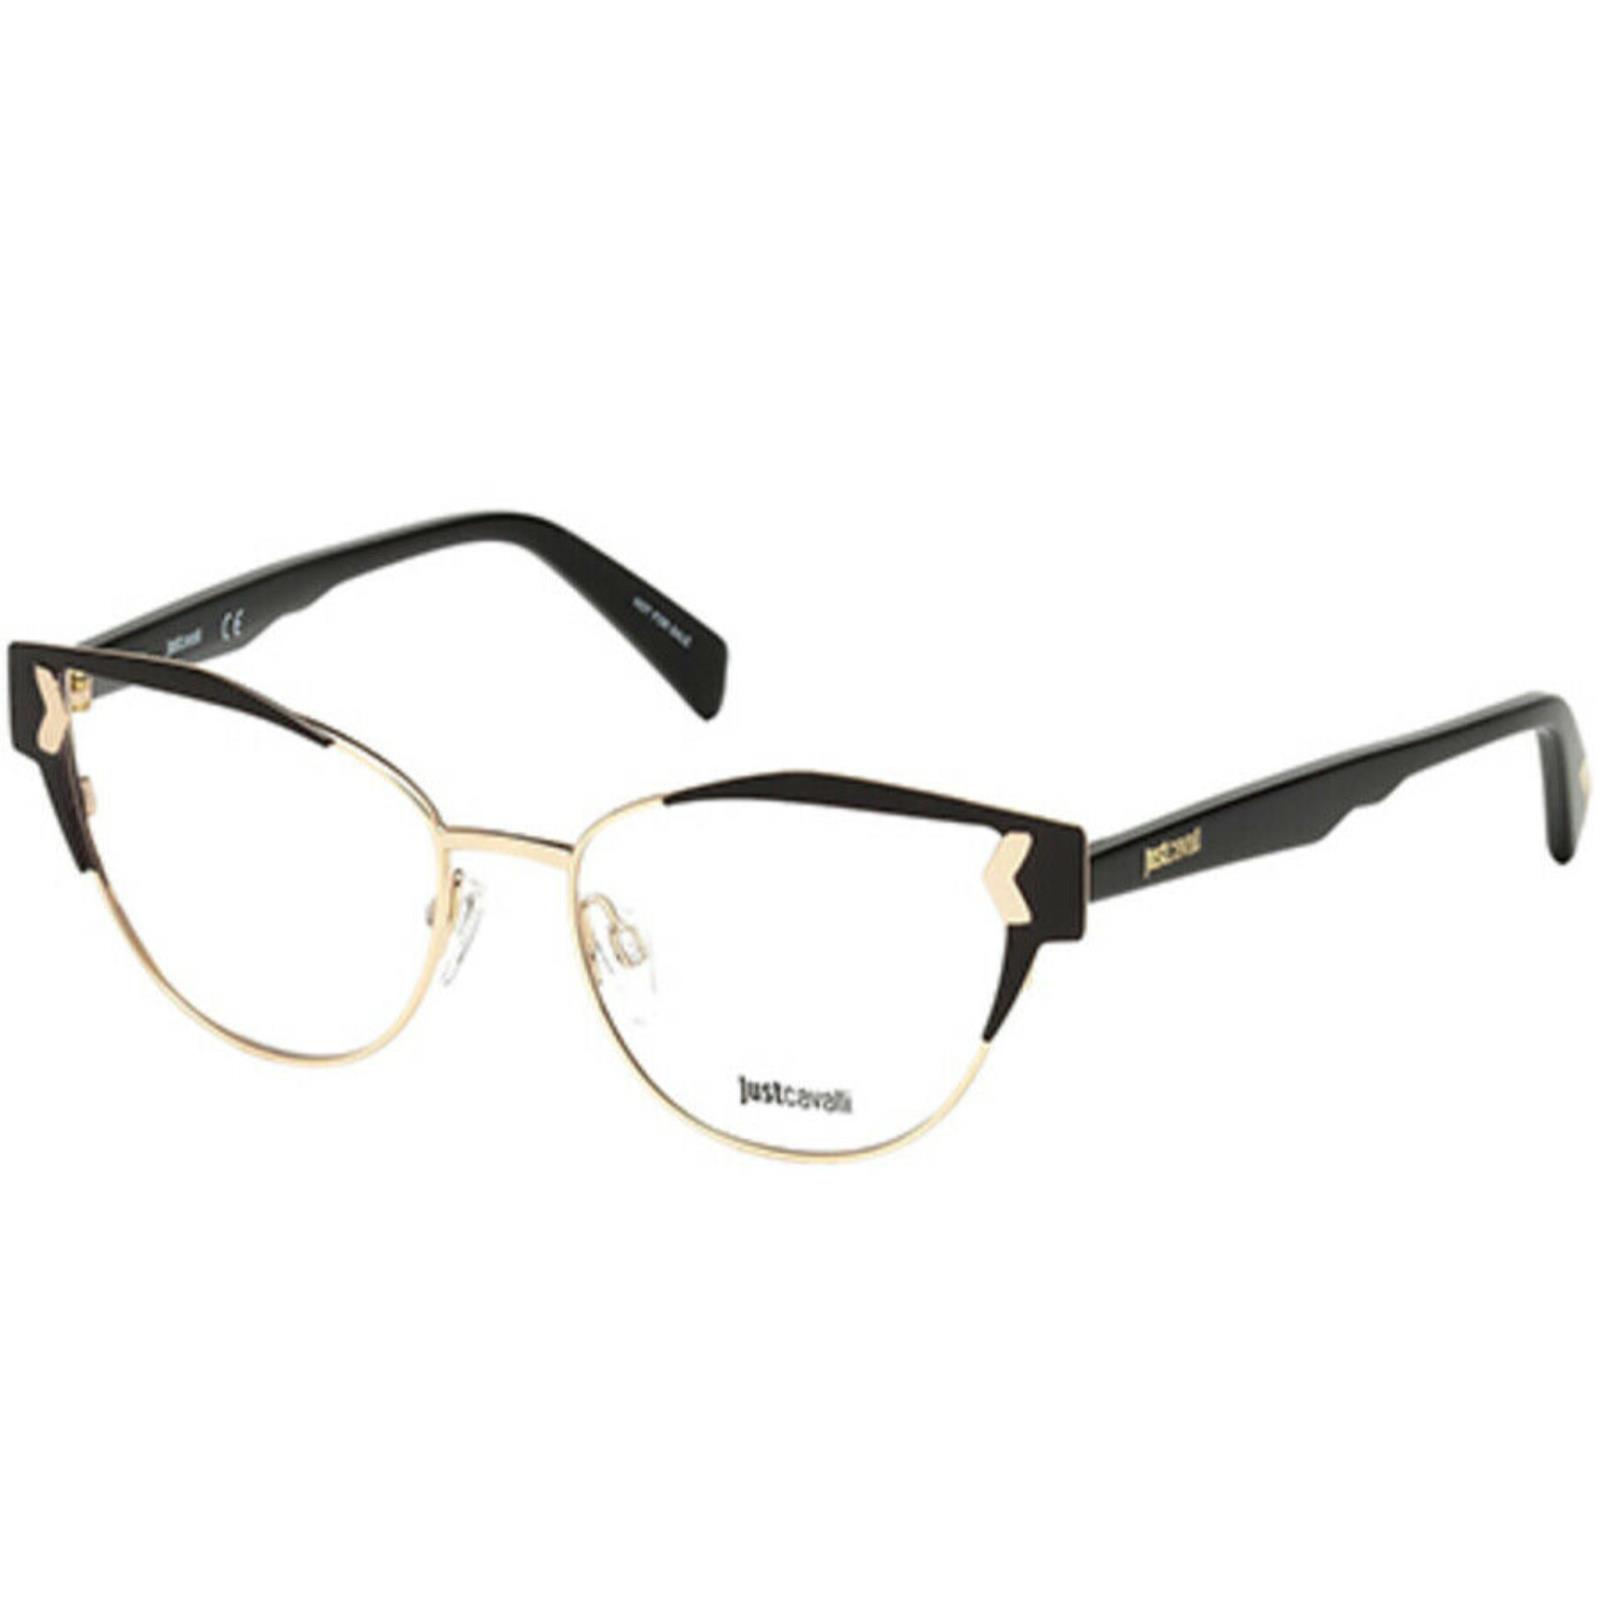 Just Cavalli Eyeglasses JC0816 028 51-16 Rx-able Black Gold Cat-eye Frames